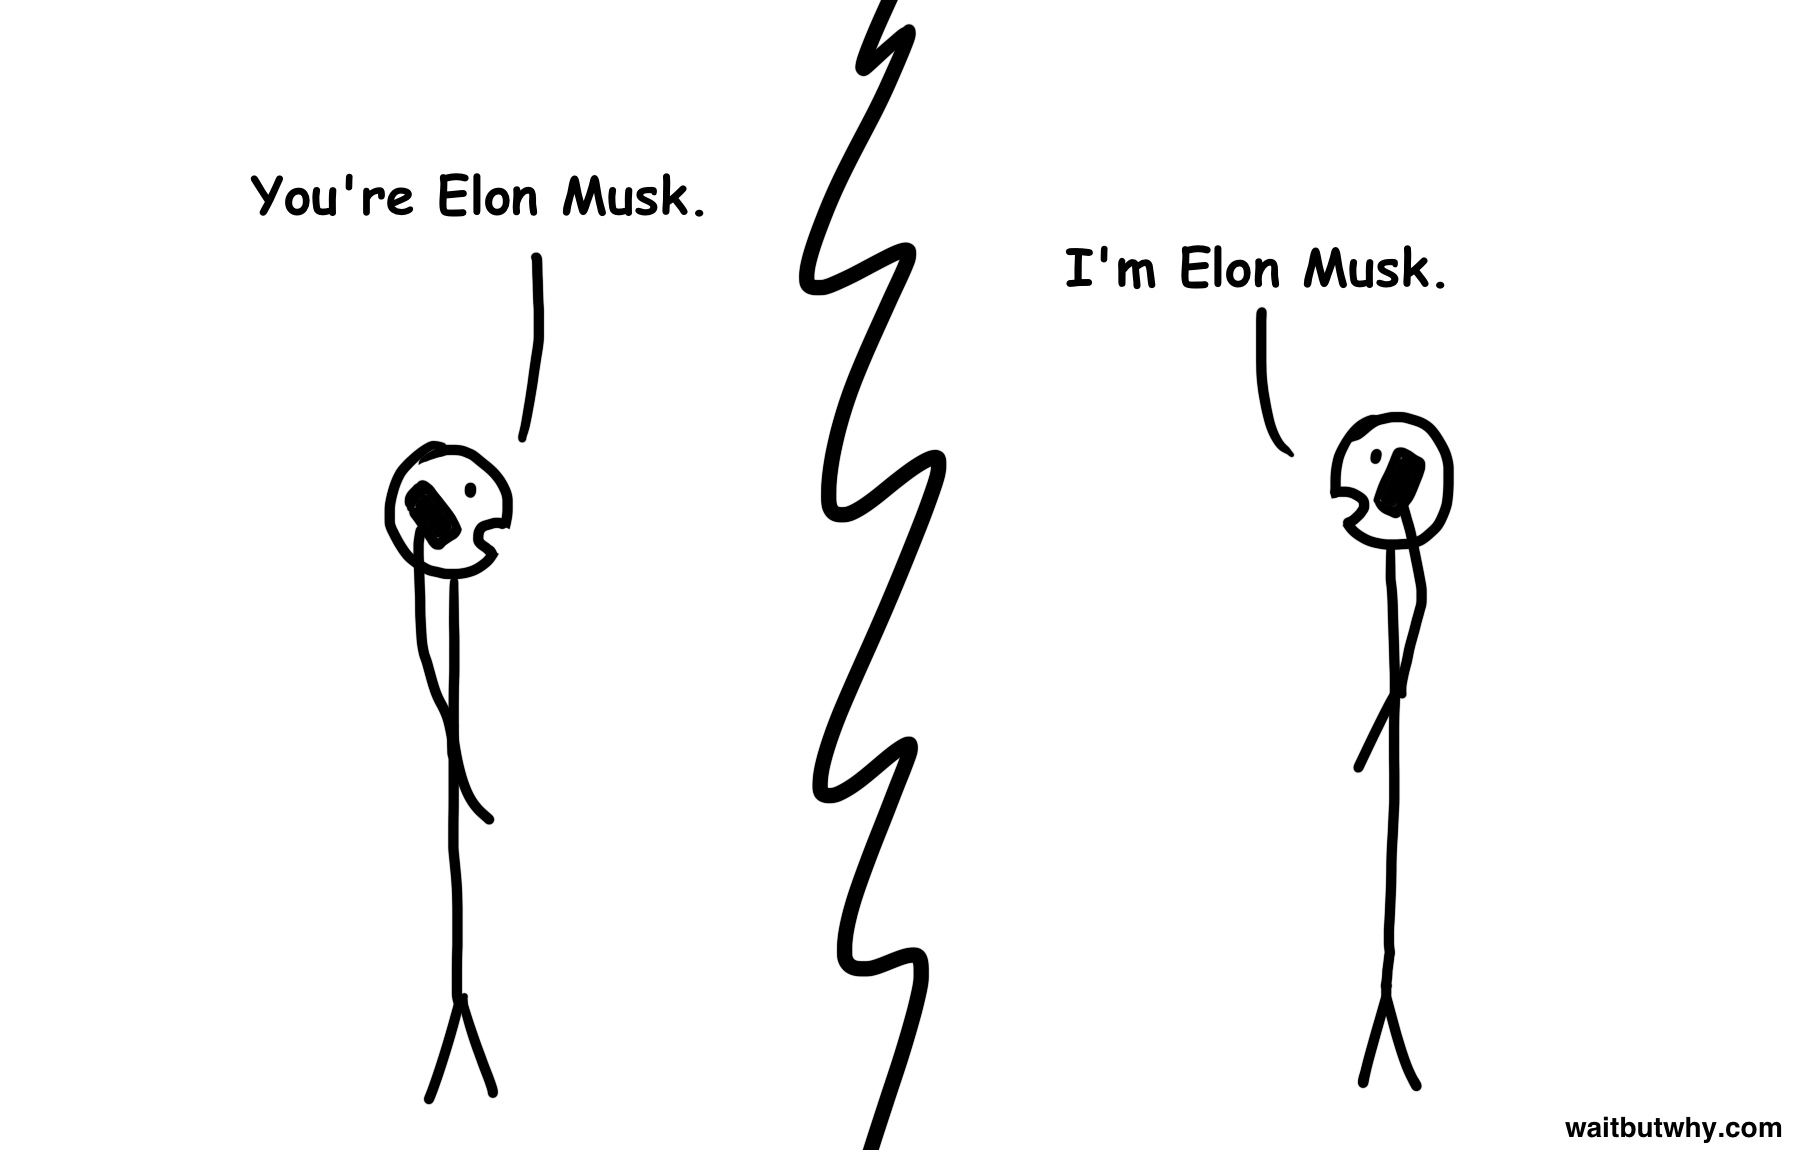 (on the phone) Tim: You're Elon Musk. Elon: I'm Elon Musk.